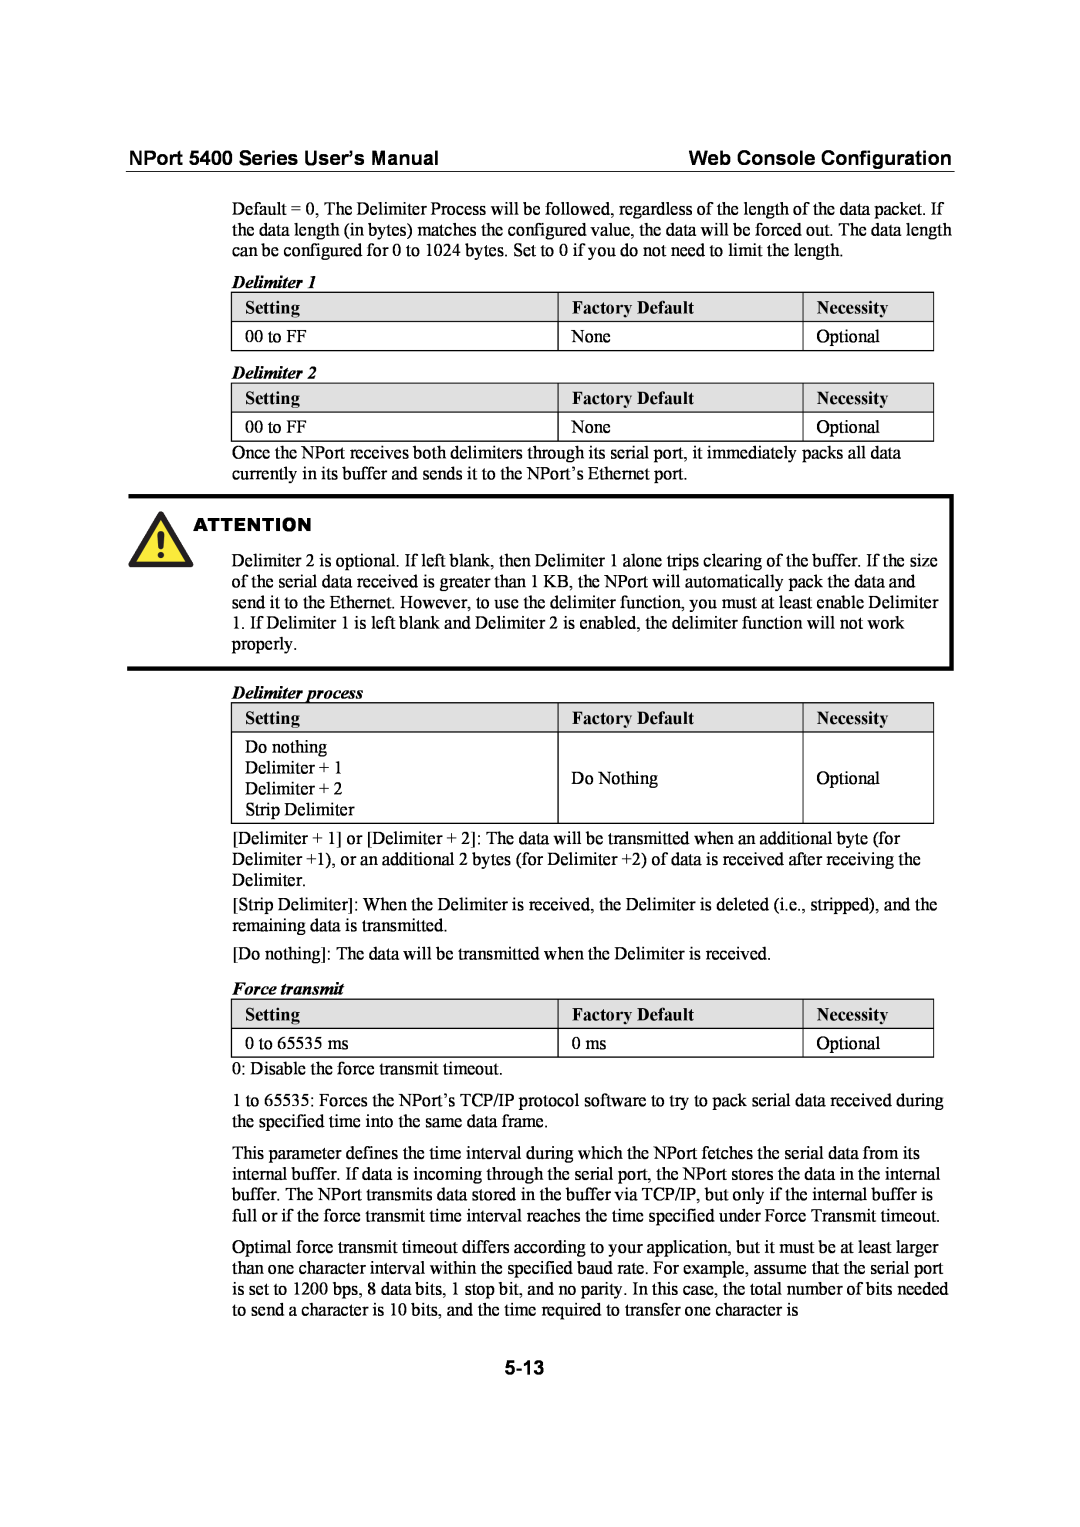 Moxa Technologies user manual NPort 5400 Series User’s Manual, Web Console Configuration, 5-13 